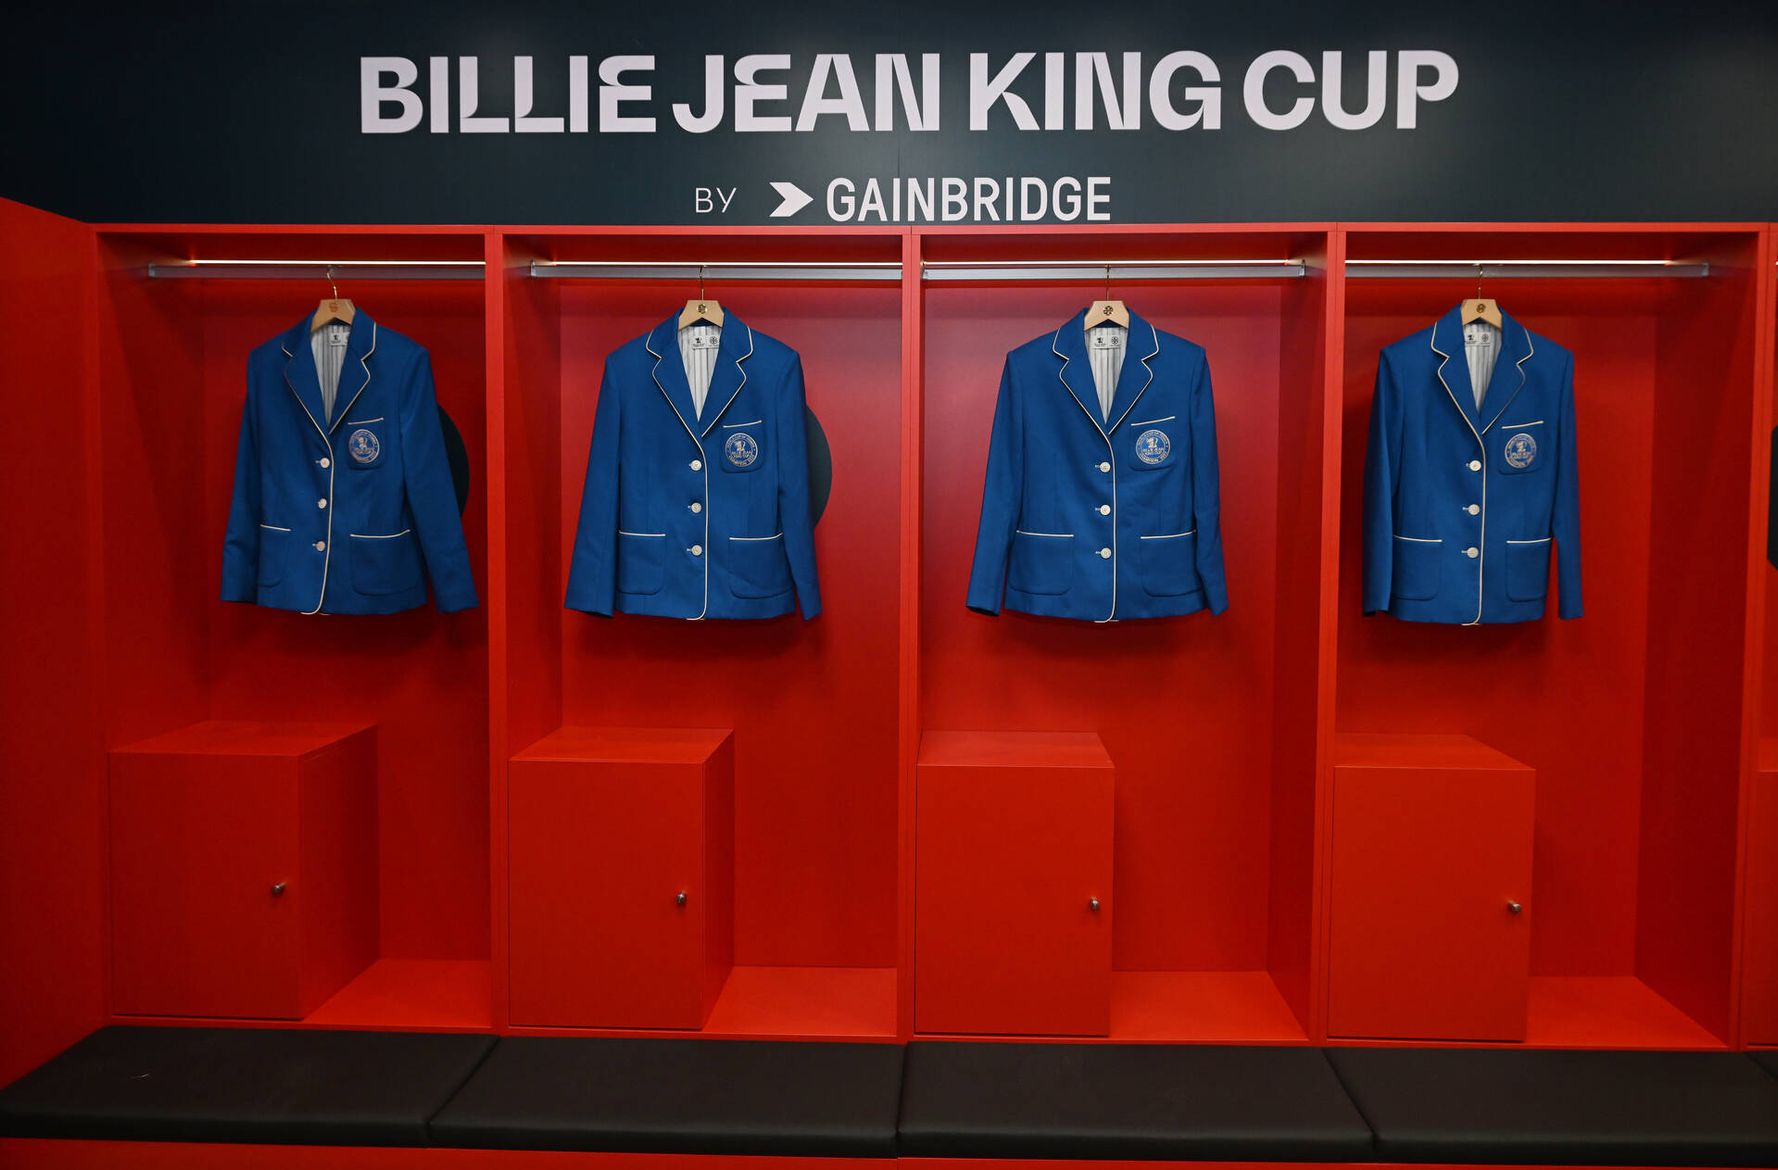 Iconic Billie Blue jacket up for grabs in 2023 Billie Jean King Cup by Gainbridge final